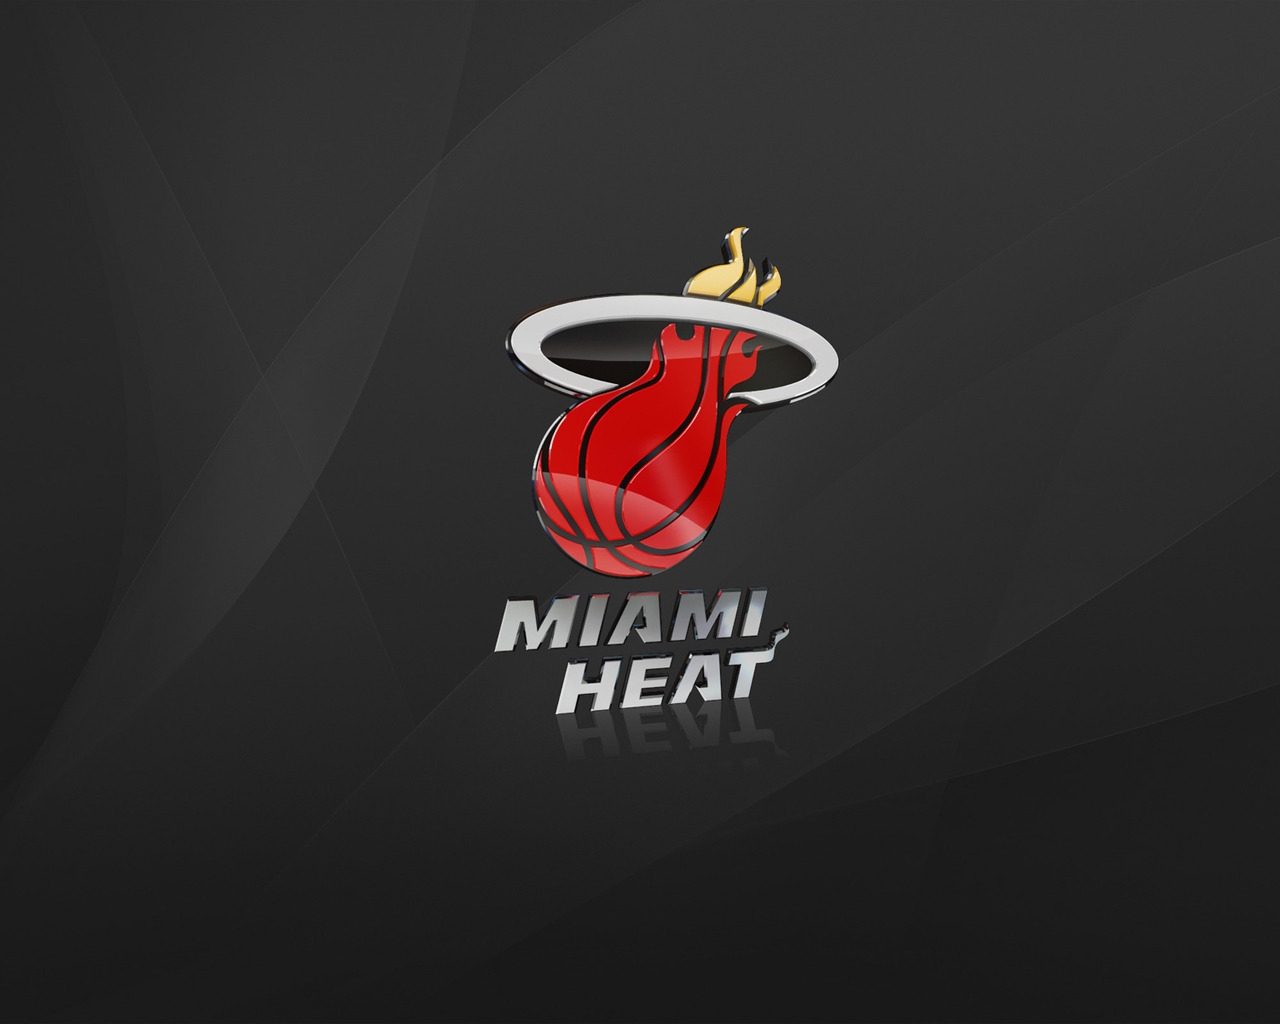 Miami Heat for 1280 x 1024 resolution